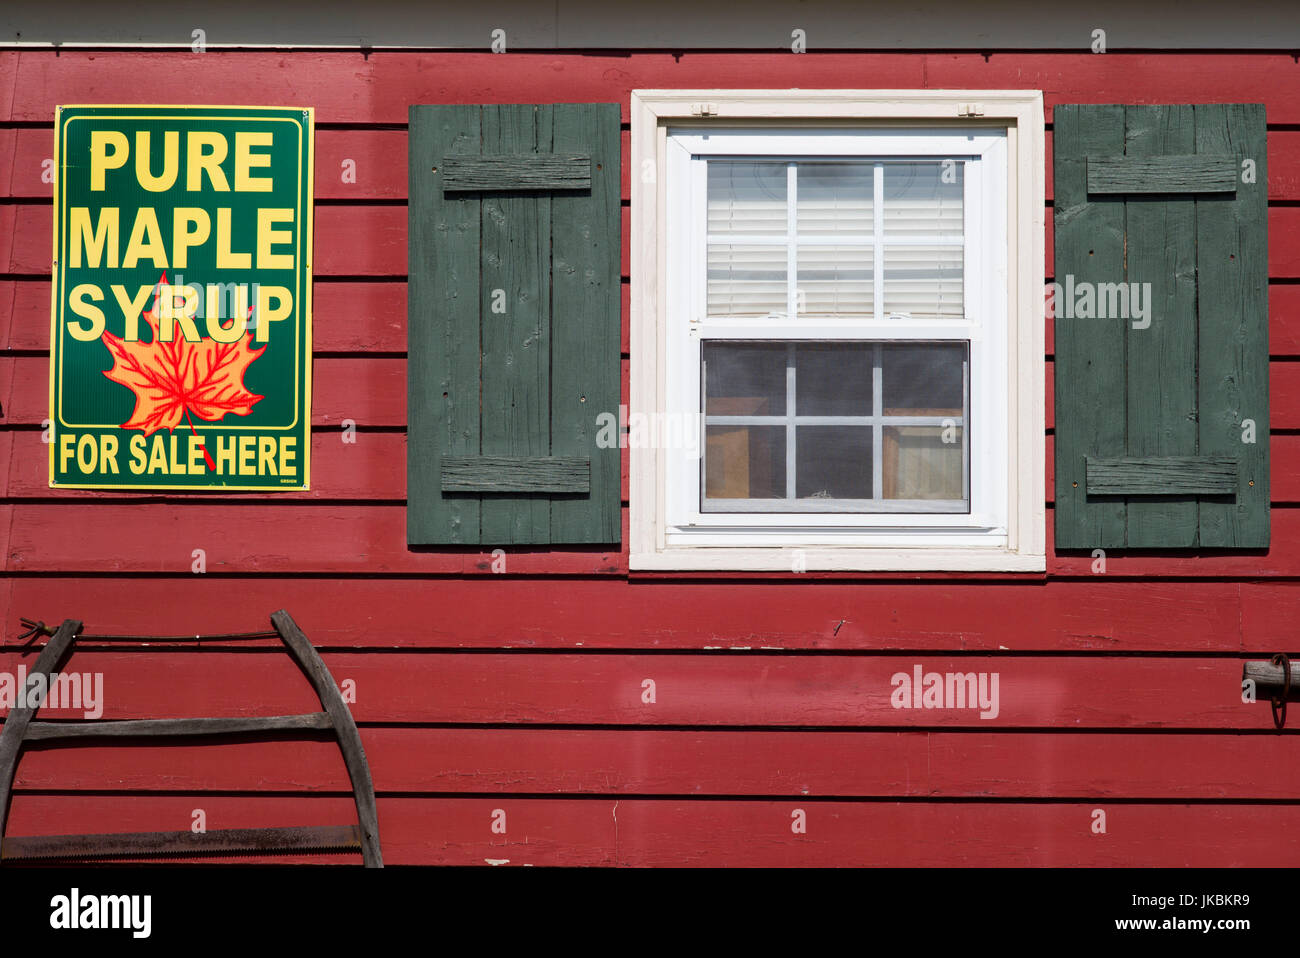 USA, Vermont, Bradford, Maple Syrup sign Stock Photo